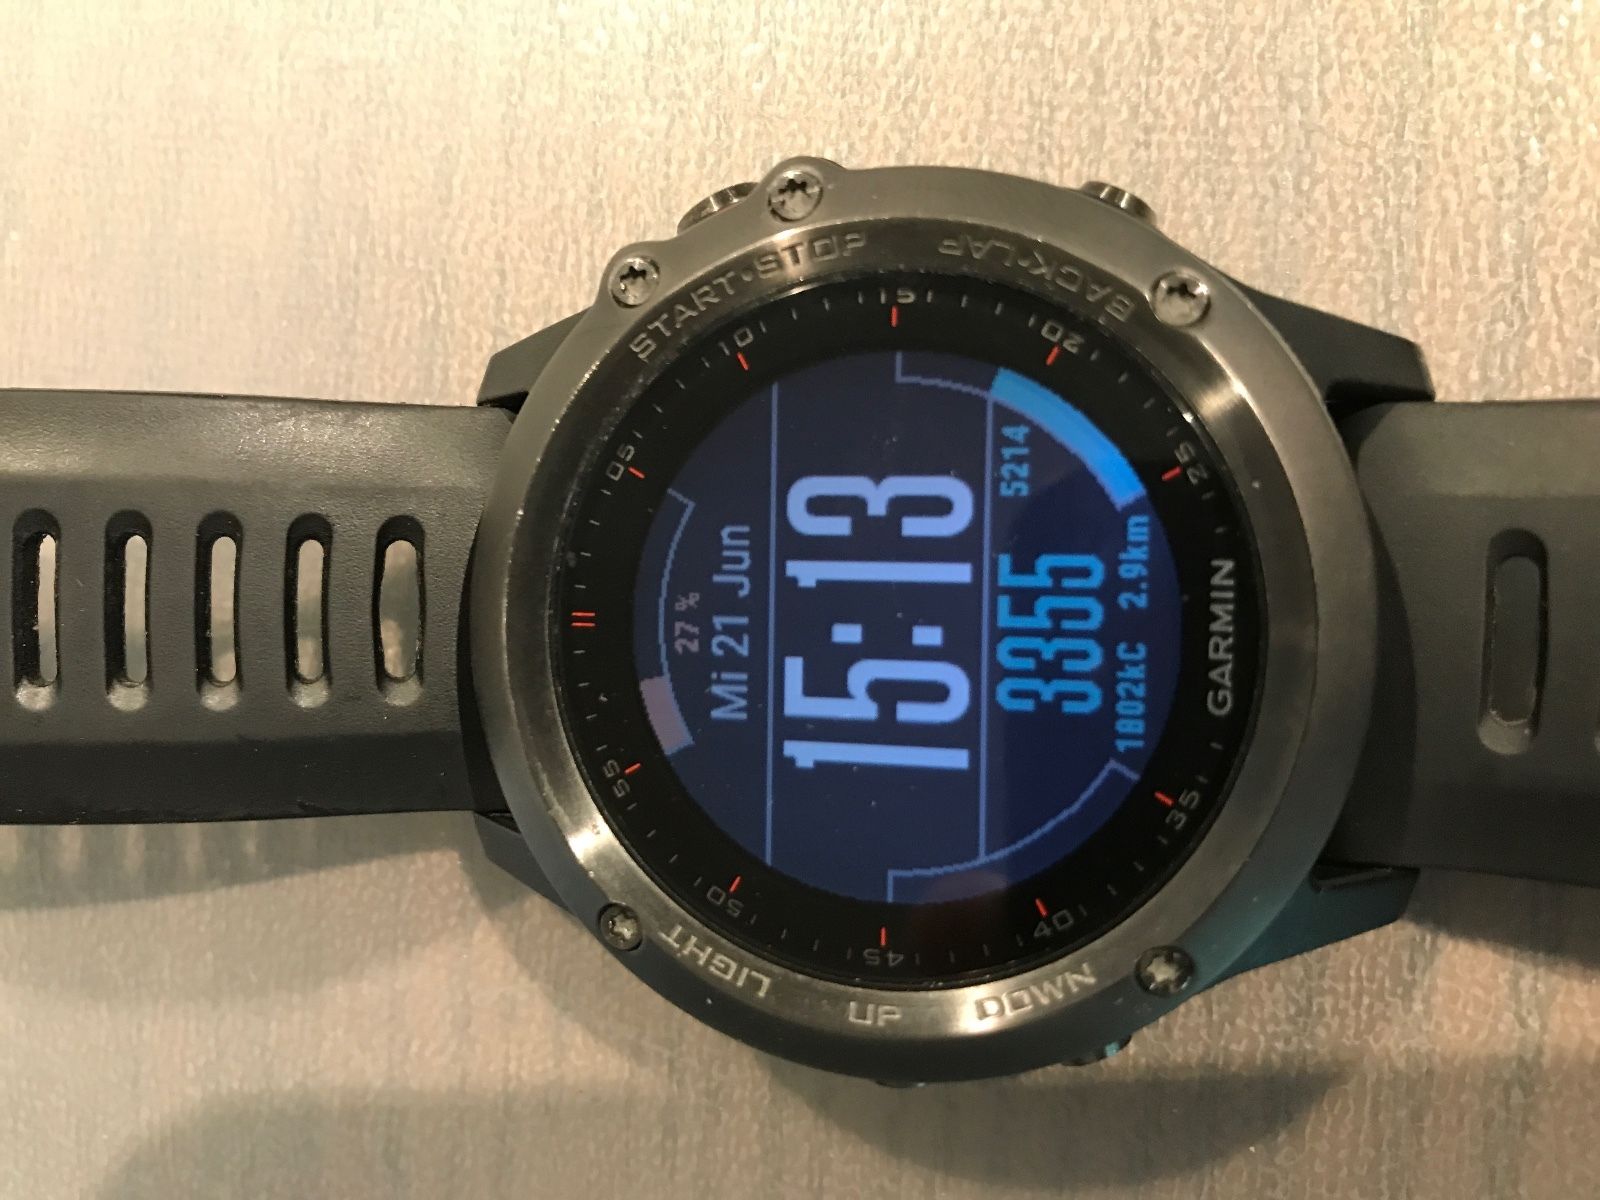 Garmin Fenix 3 Multi-Sport Training GPS Watch - HRM-RUN (Brustgurt) BUNDLE